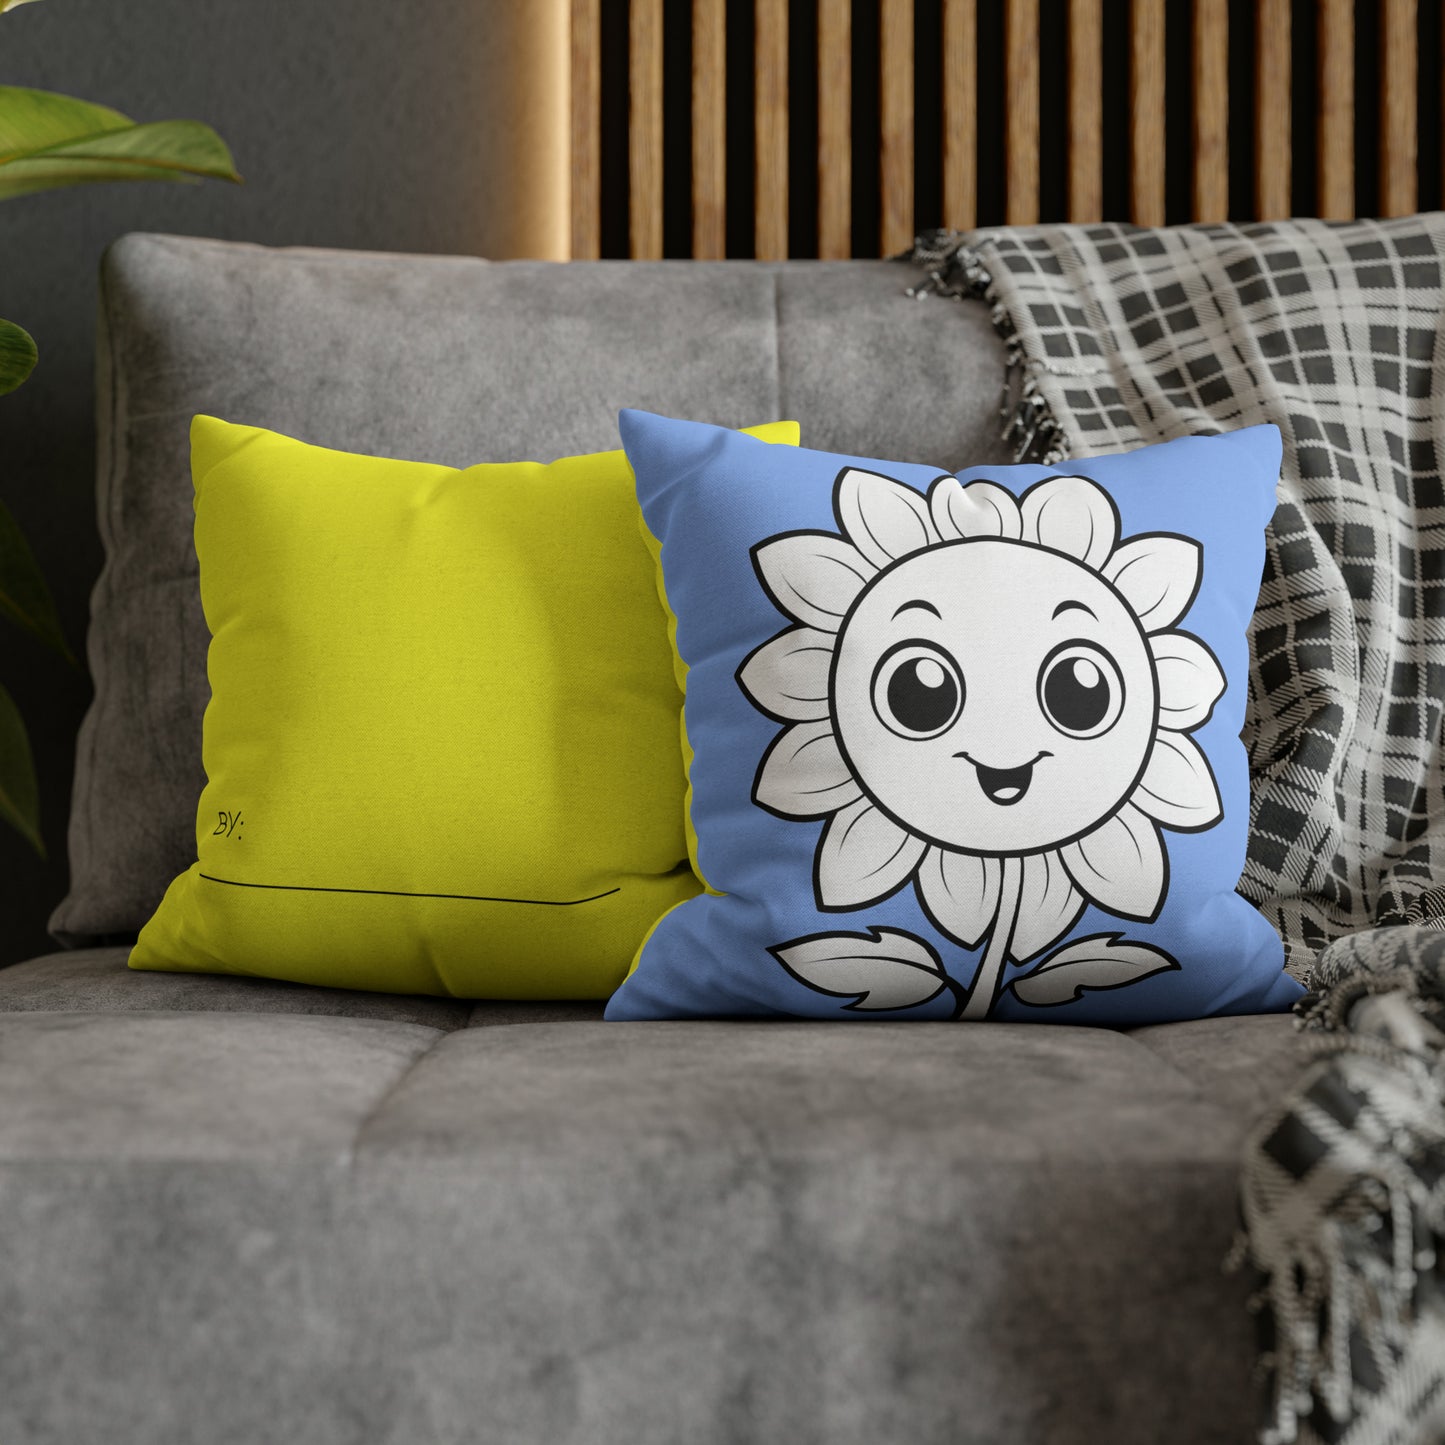 Painted Pillows - Sunflower